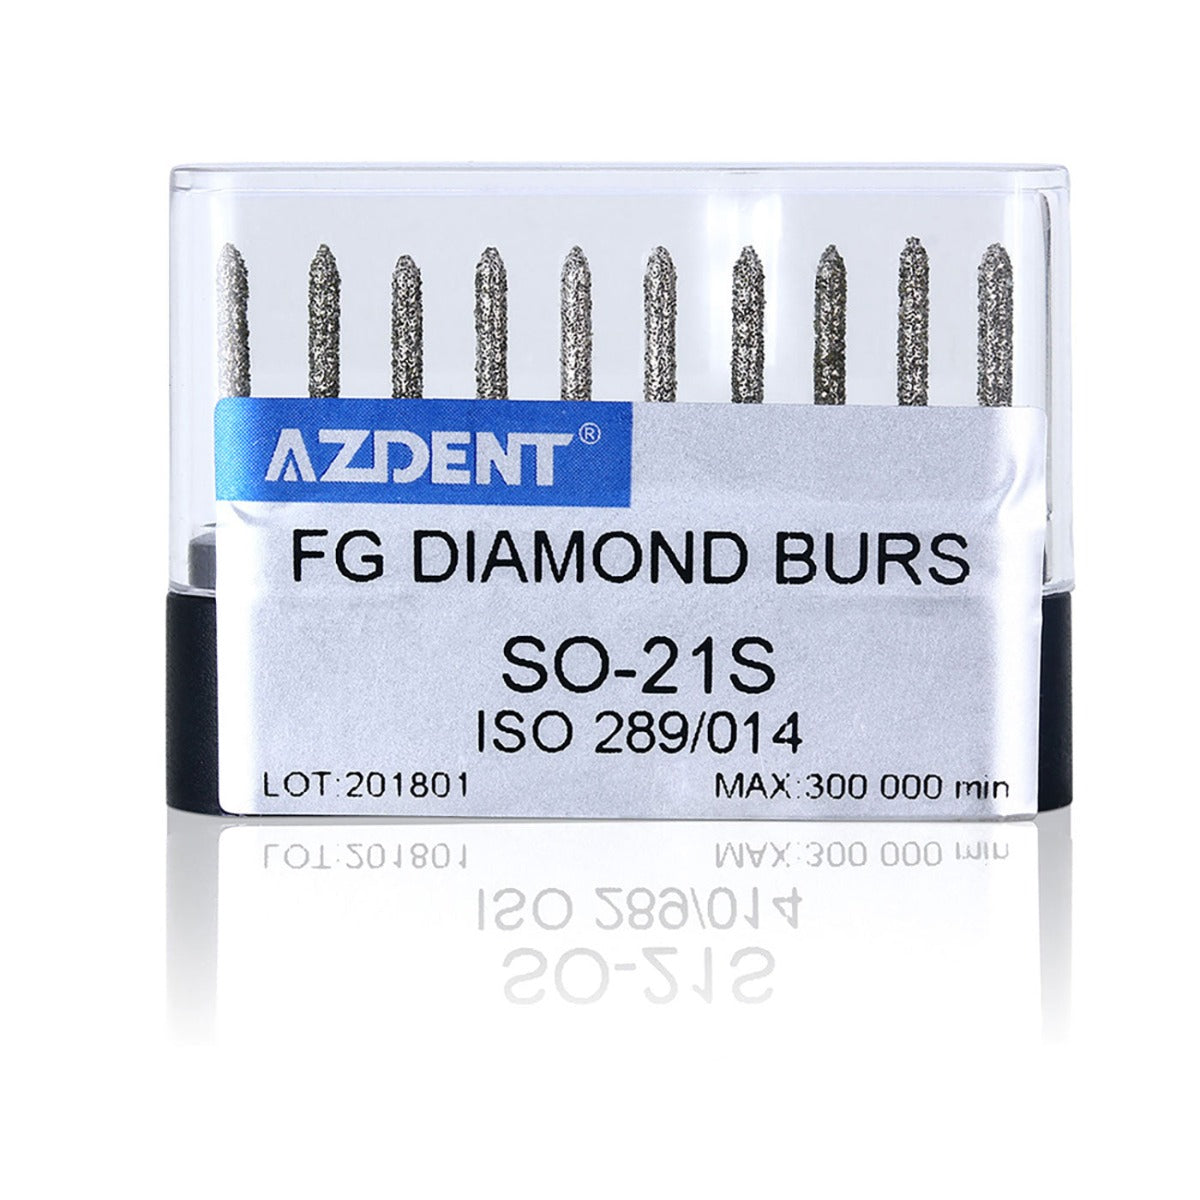 AZDENT FG Diamond Burs SO-21S 10pcs/Box - pairaydental.com